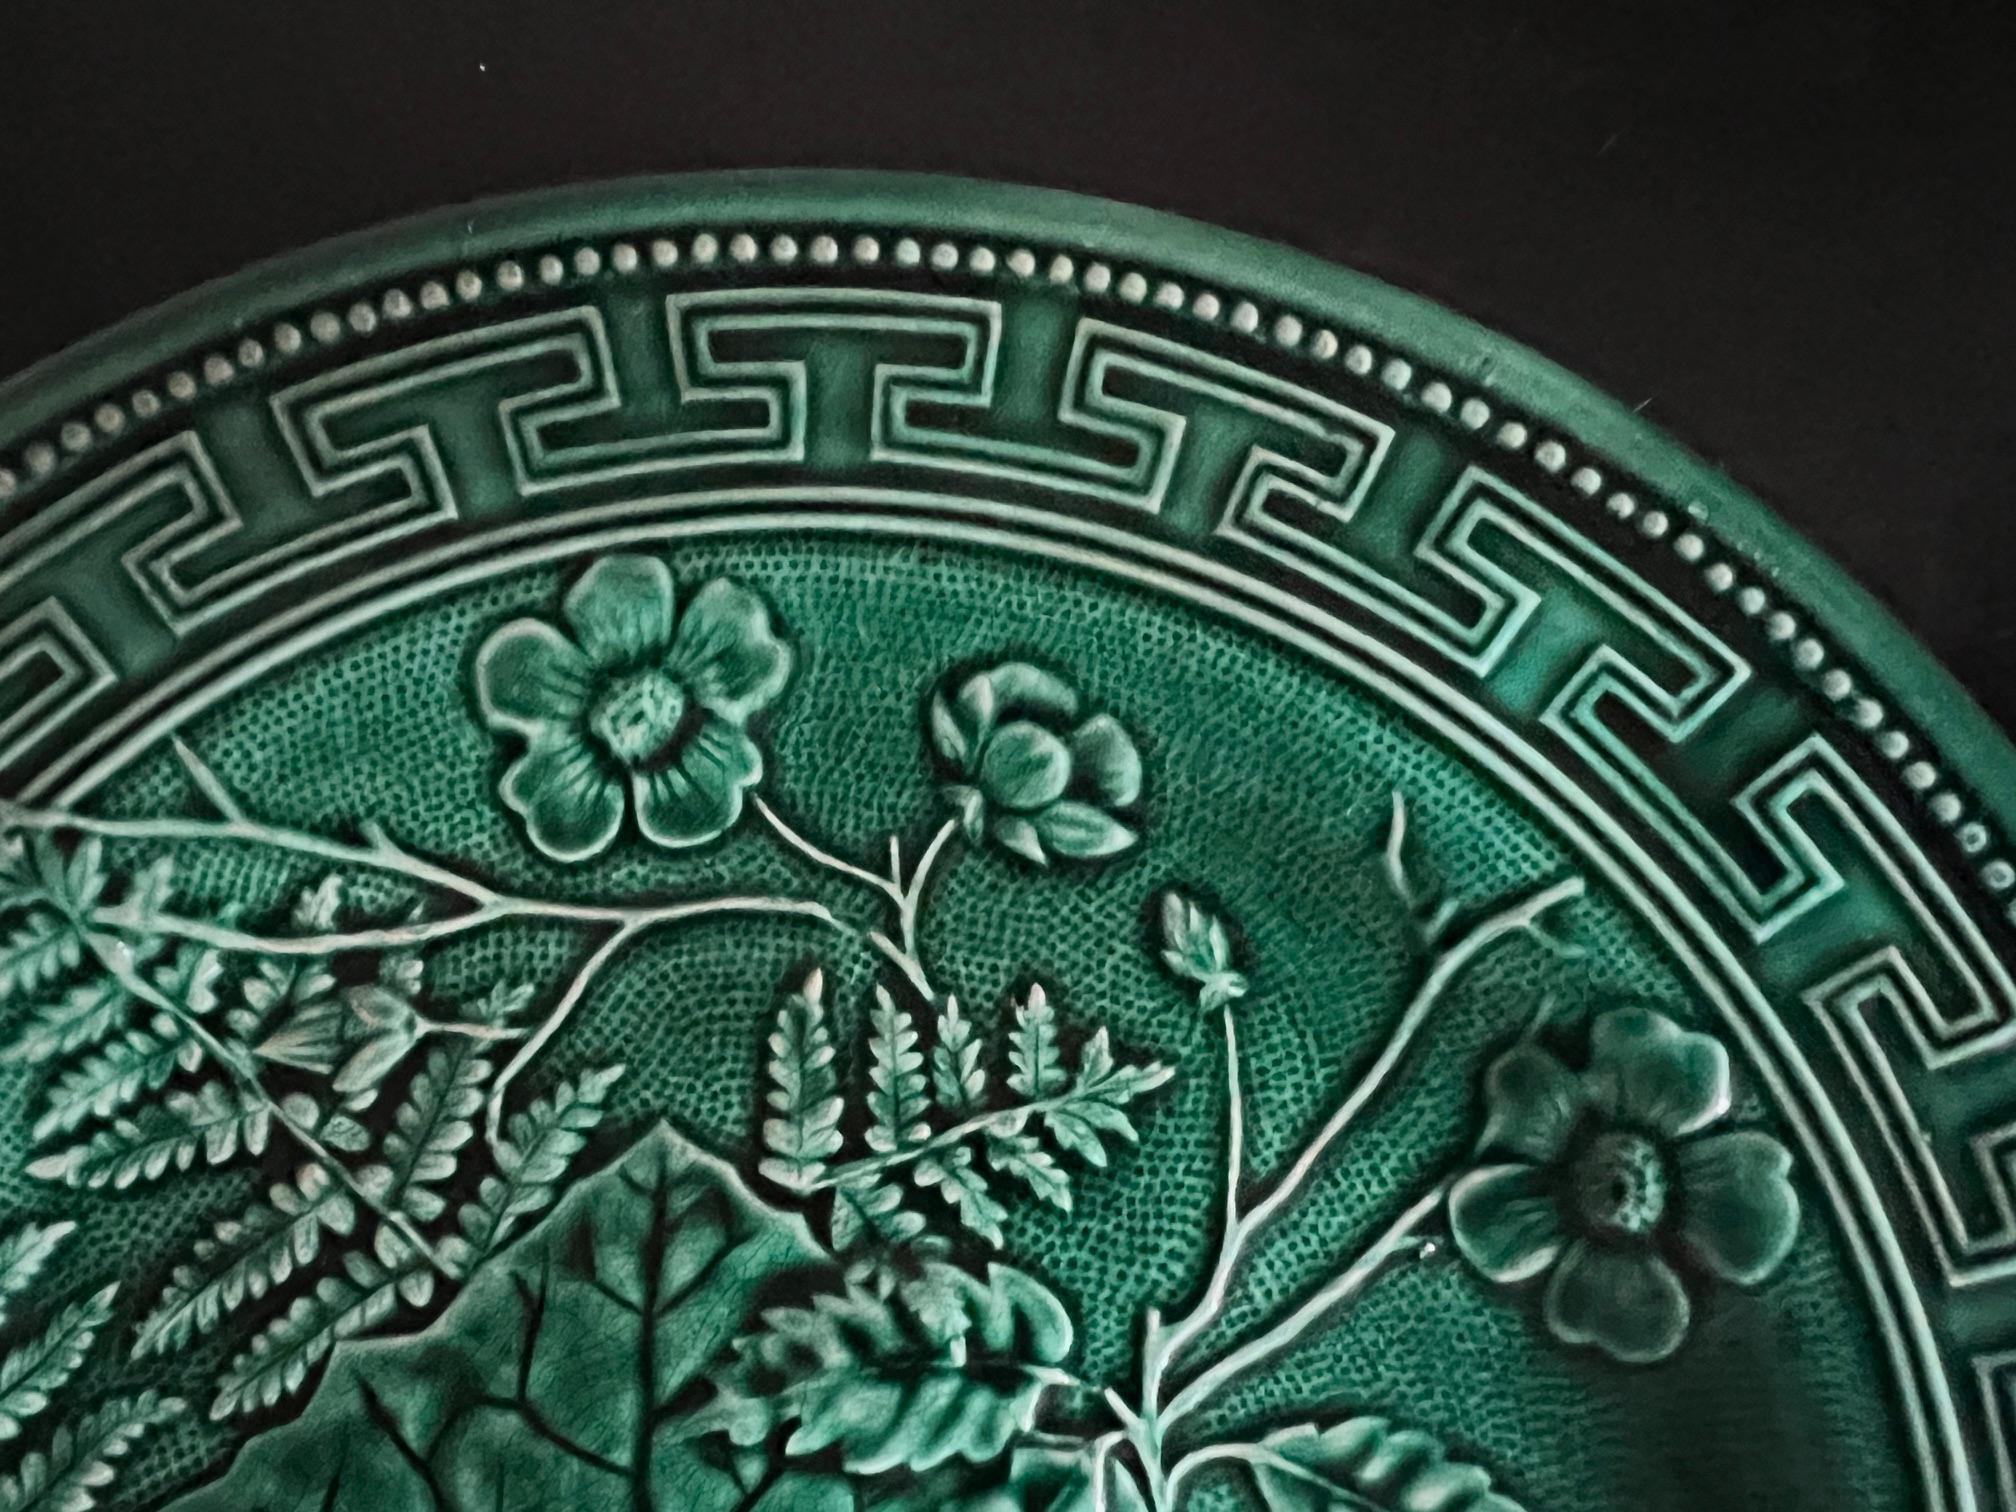 English Antique European Majolica Fern & Leaf Plate With Greek Key Border- Set of 2